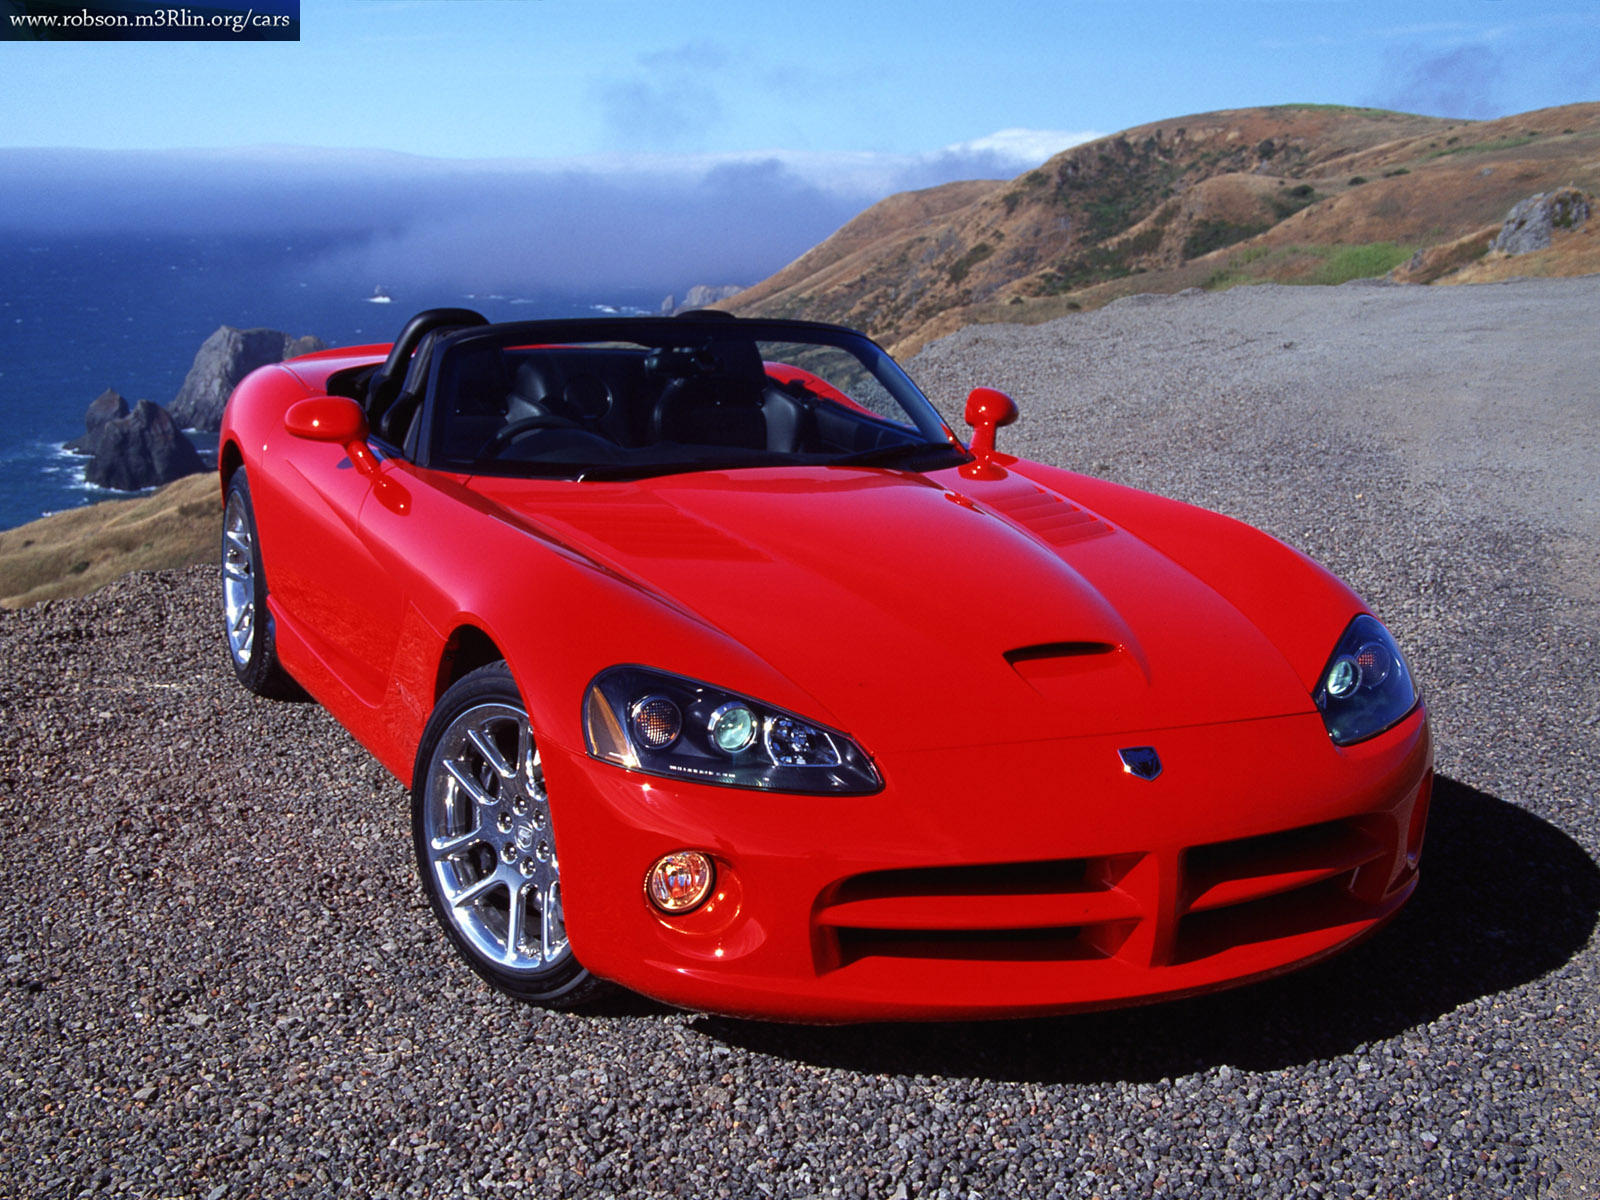 Chrysler Viper  8.0 V10 455 KM - dane techniczne, wymiary, spalanie i opinie